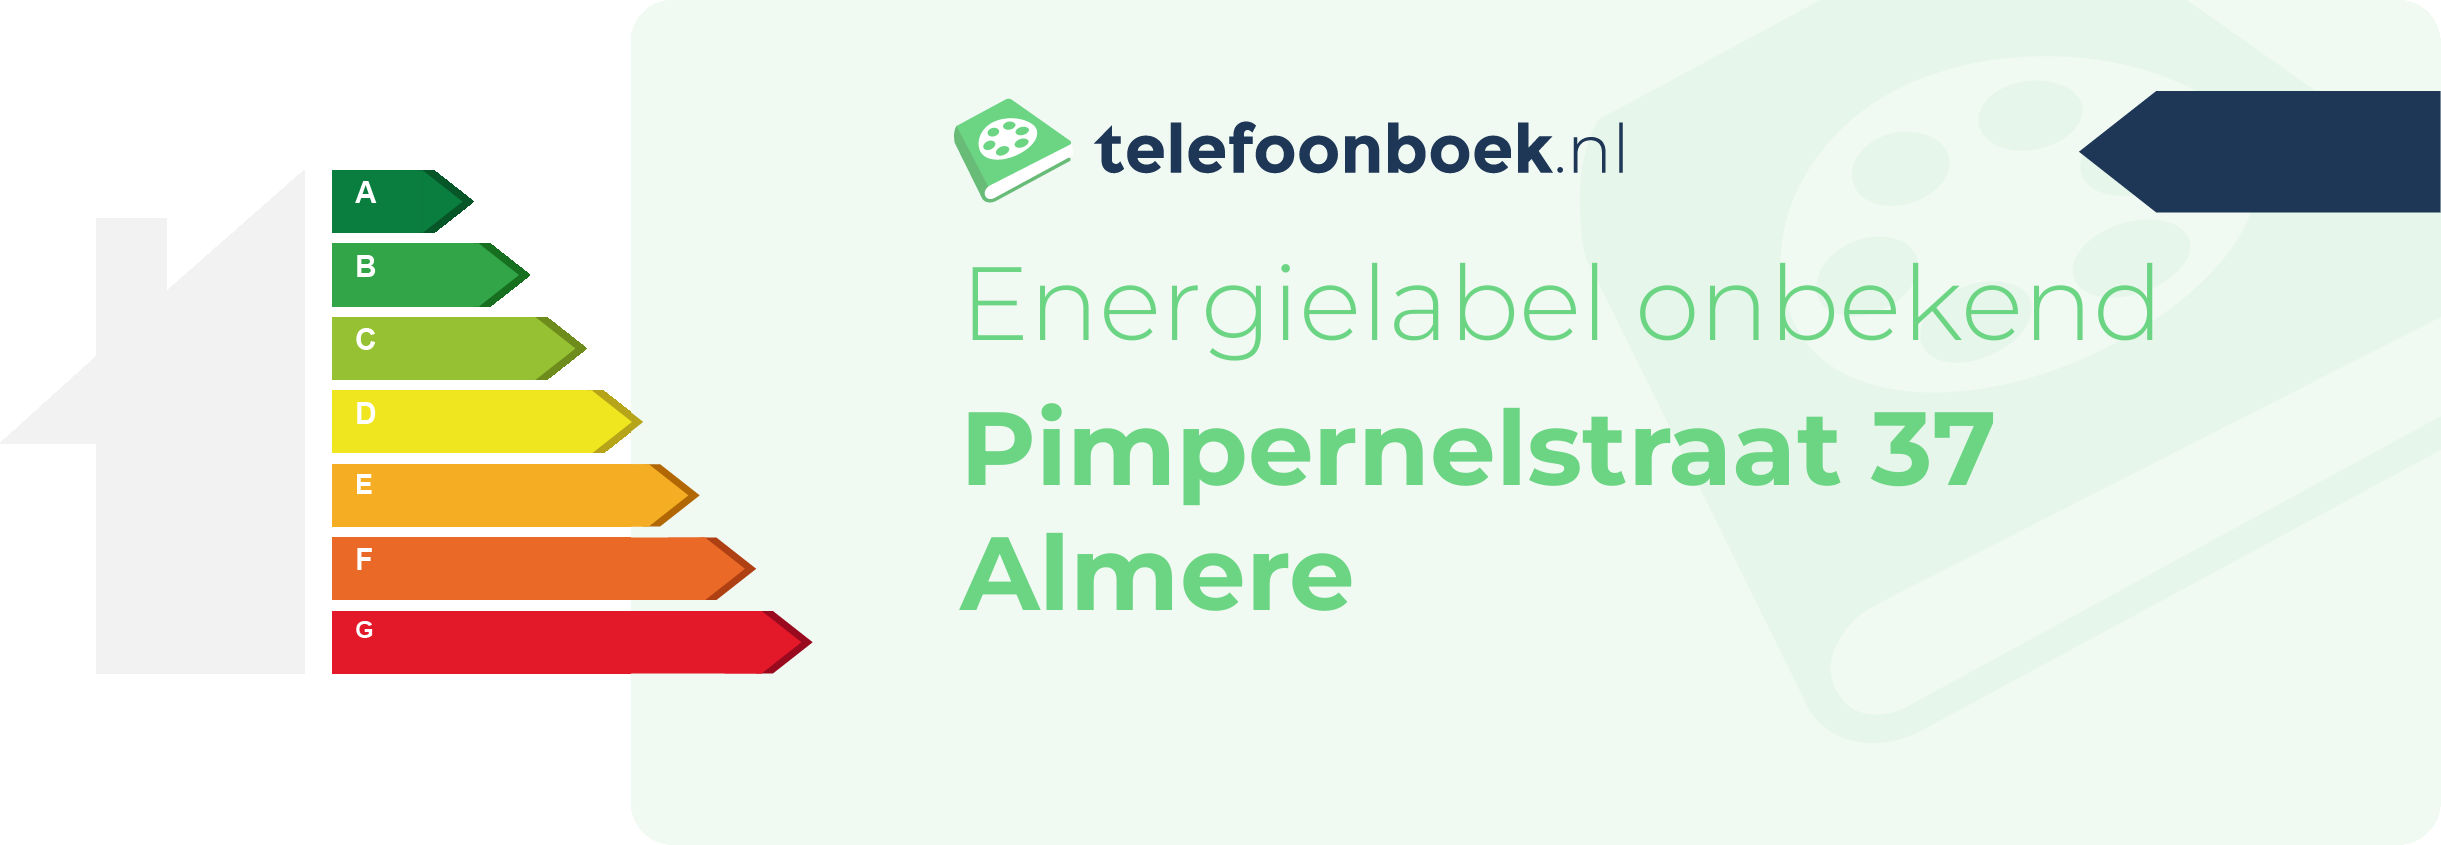 Energielabel Pimpernelstraat 37 Almere